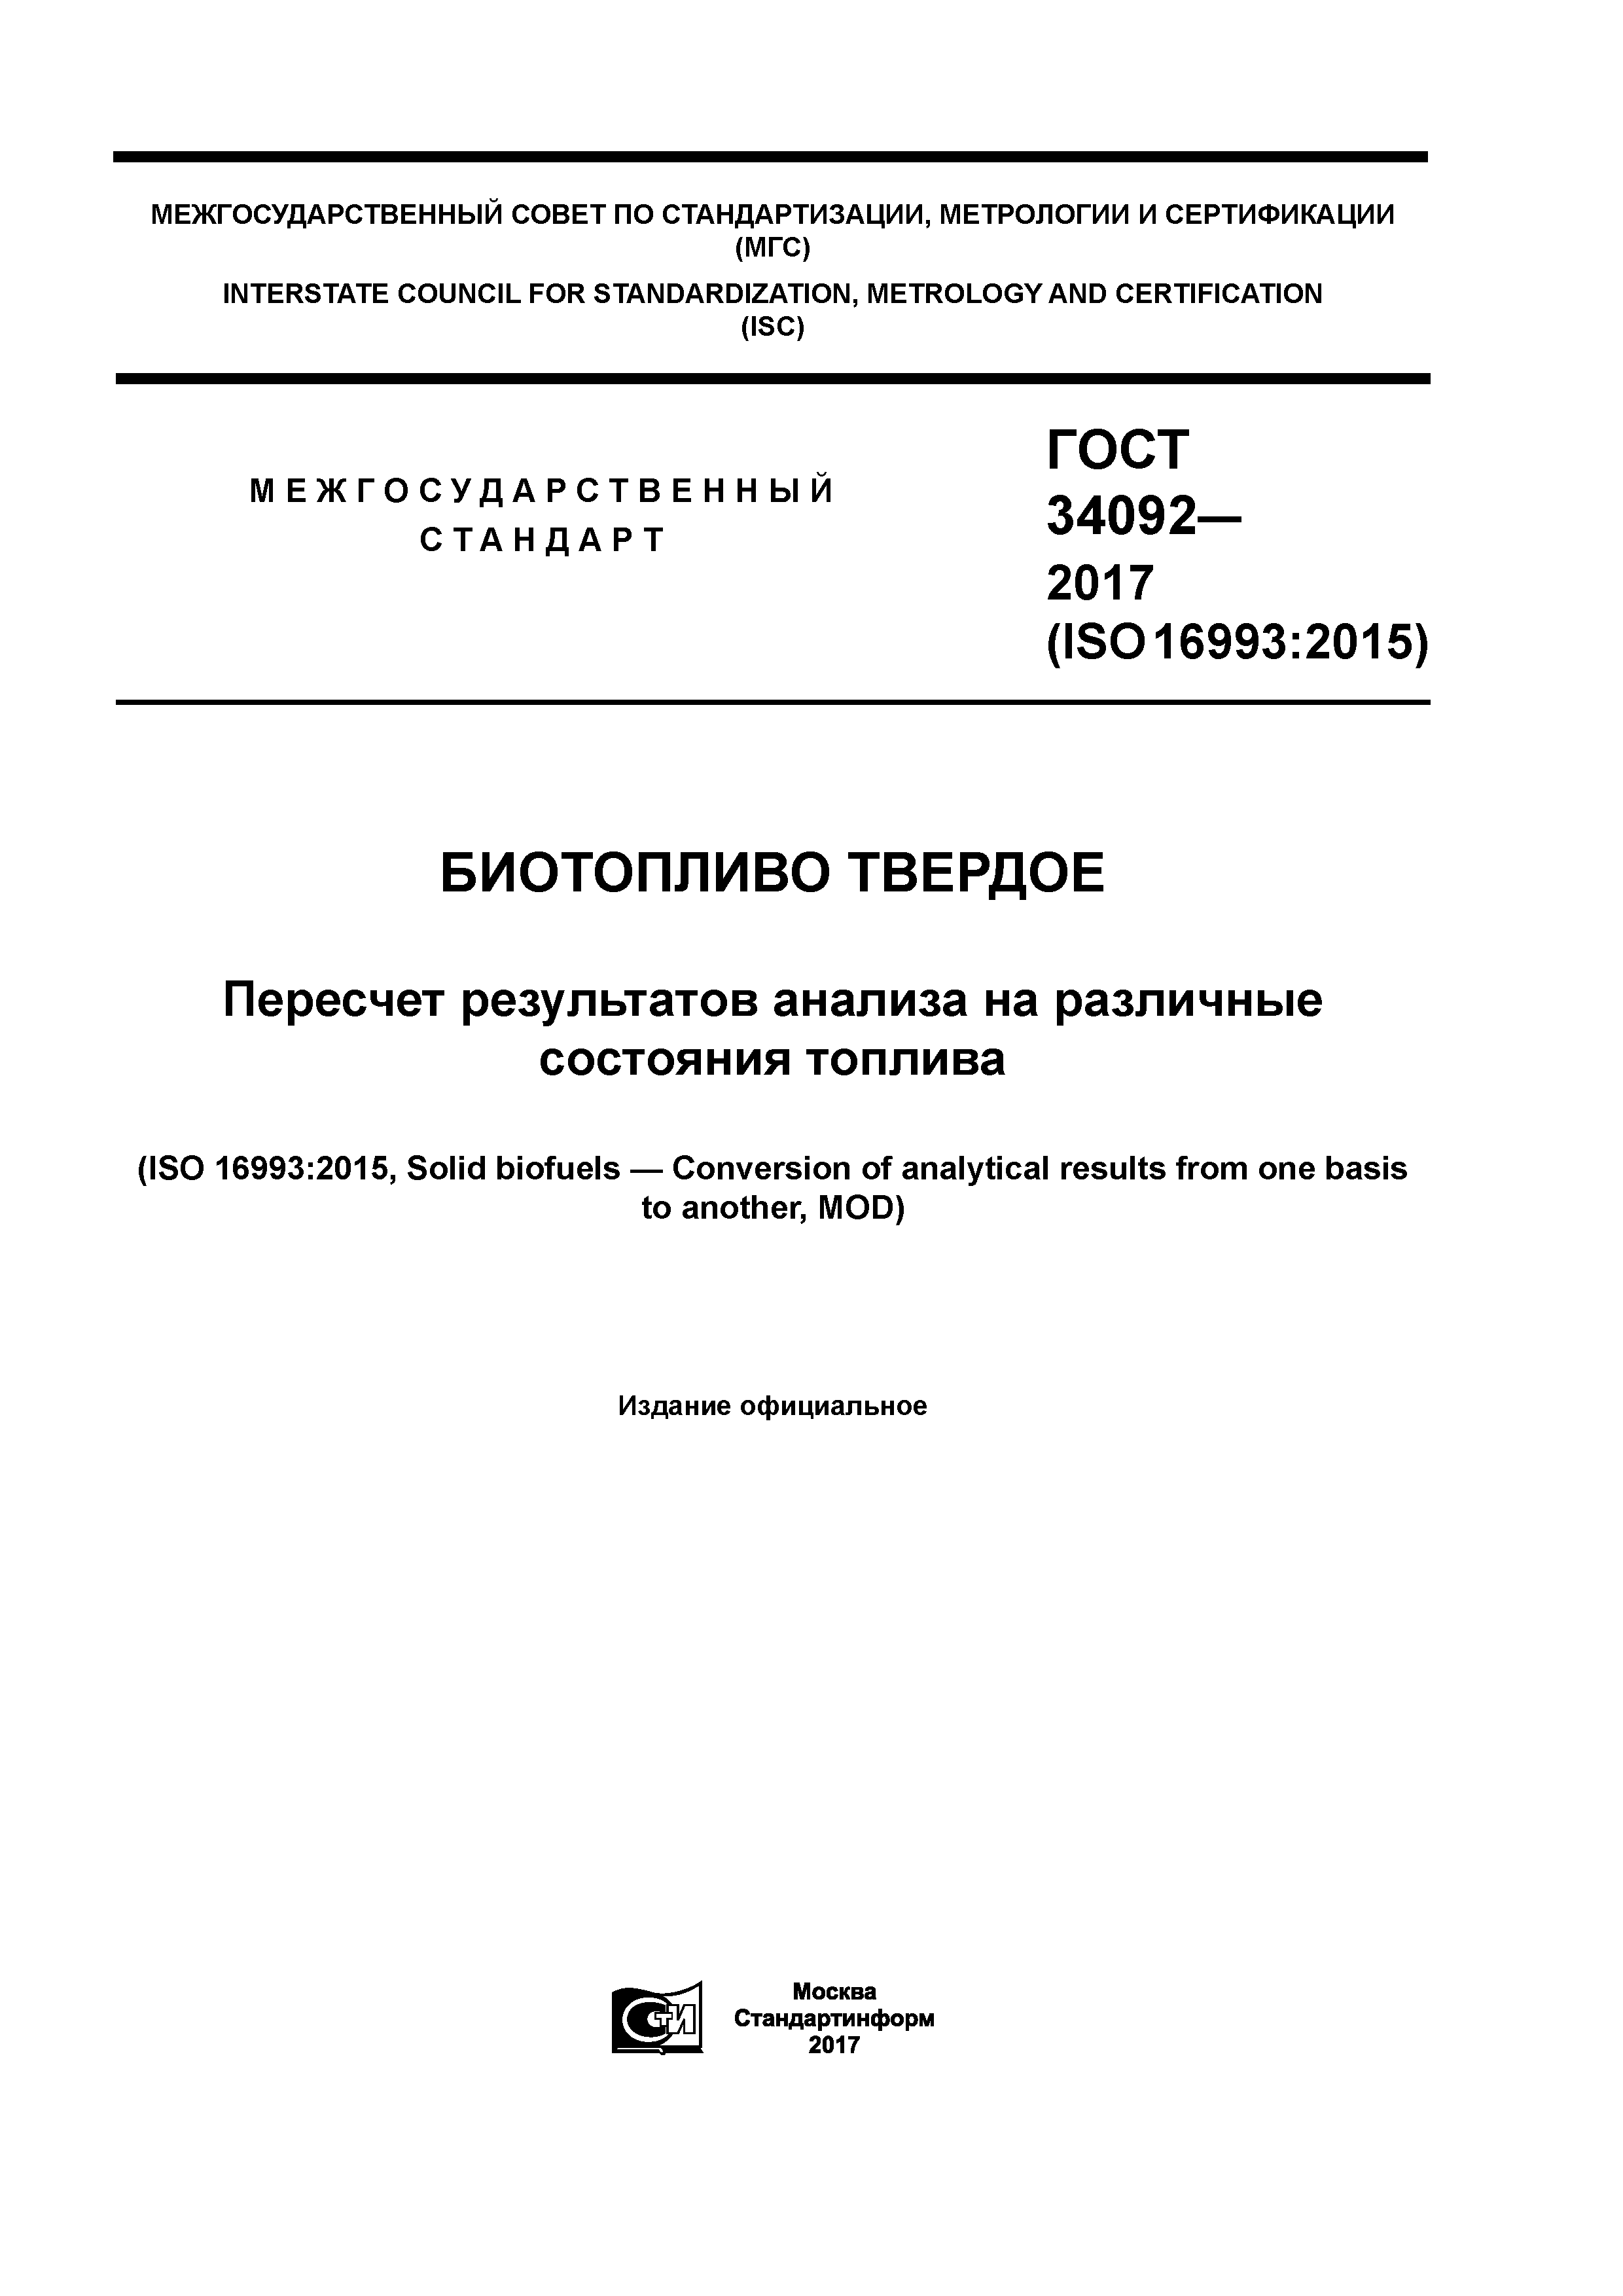 ГОСТ 34092-2017